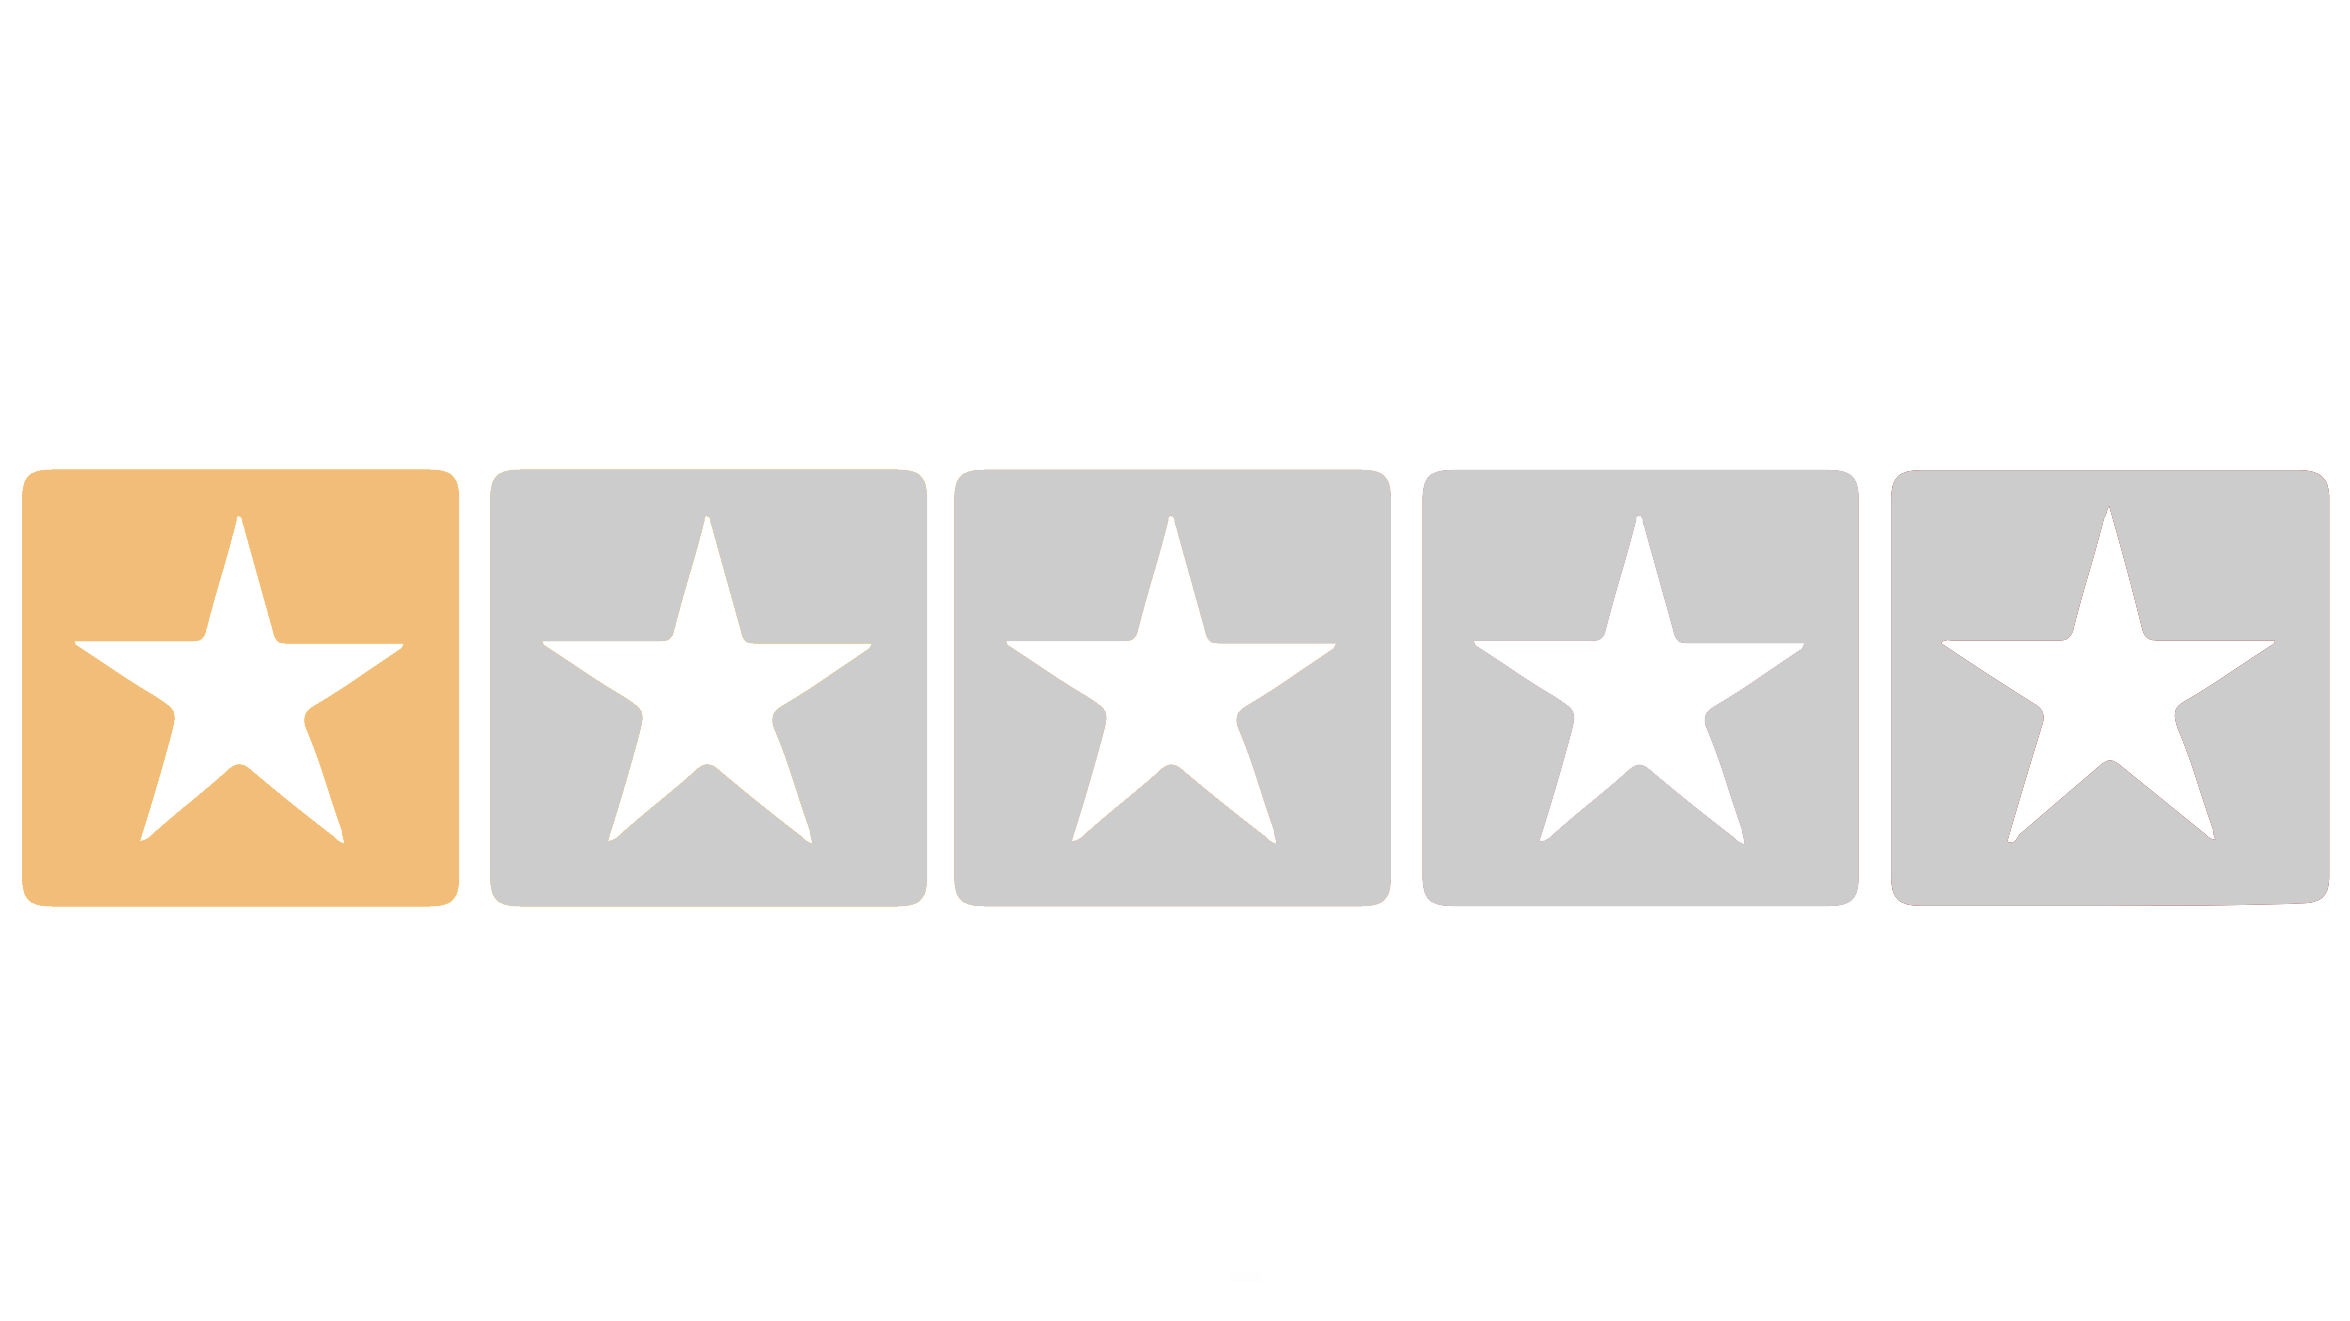 Chris G’s Best Yelp Reviews: British Consulate General – 1/5 Stars